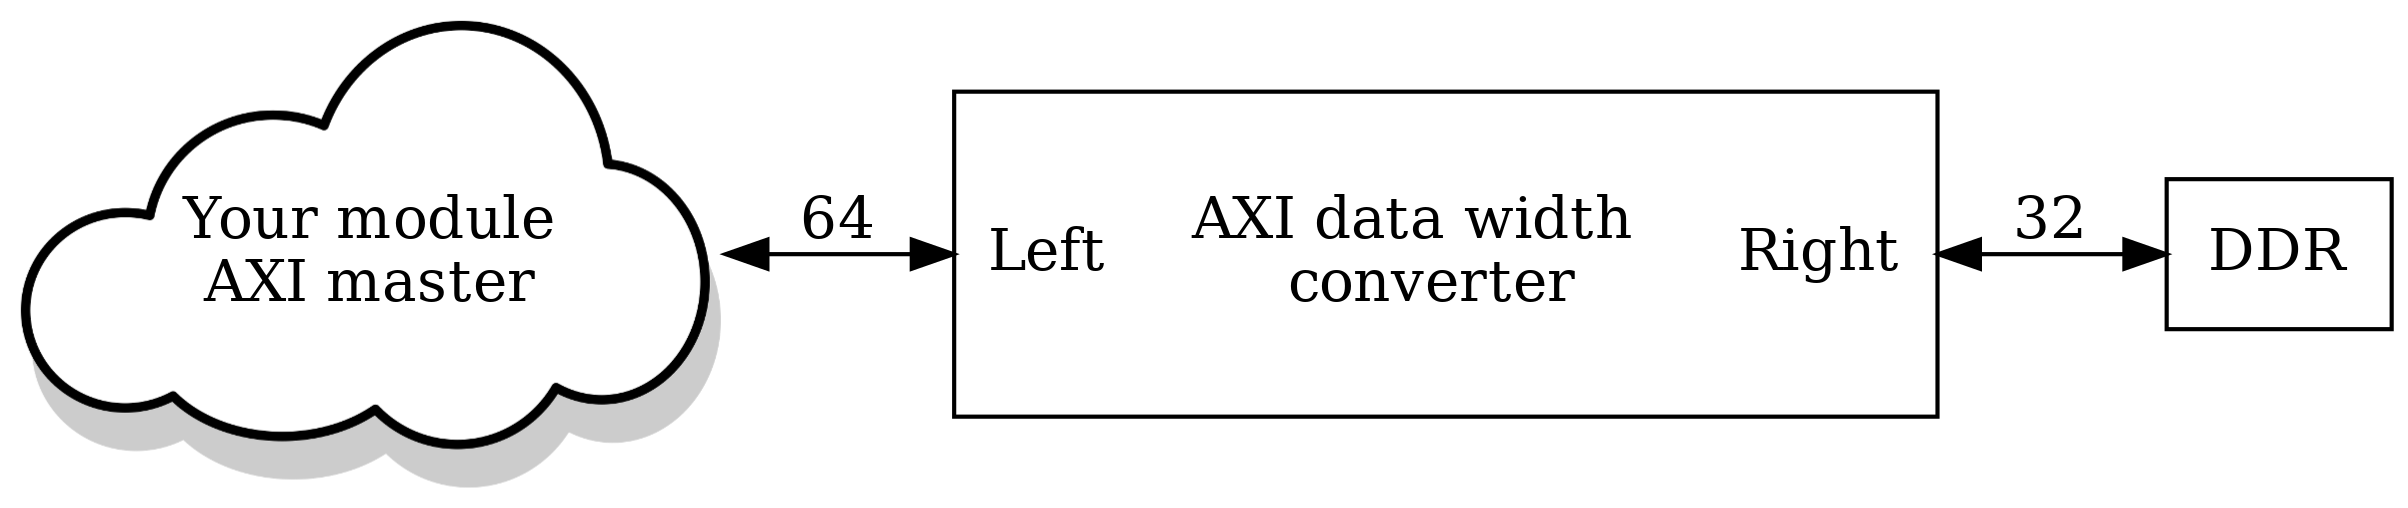 digraph my_graph {
graph [ dpi = 300 ];
rankdir="LR";
cloud [ label="Your module\nAXI master" shape=none, image="cloud_700.png"];
cloud -> axi_width_converter [label="64" dir="both"];
axi_width_converter [ shape=box label=<
<table border="0" cellborder="0" cellspacing="0" cellpadding="0">
<tr>
  <td align="left">Left</td>
  <td cellpadding="20">AXI data width <br /> converter</td>
  <td align="right">Right</td>
  </tr>
</table>>];
axi_width_converter -> ddr [label="32" dir="both"];
ddr [ label="DDR" shape=box];
}